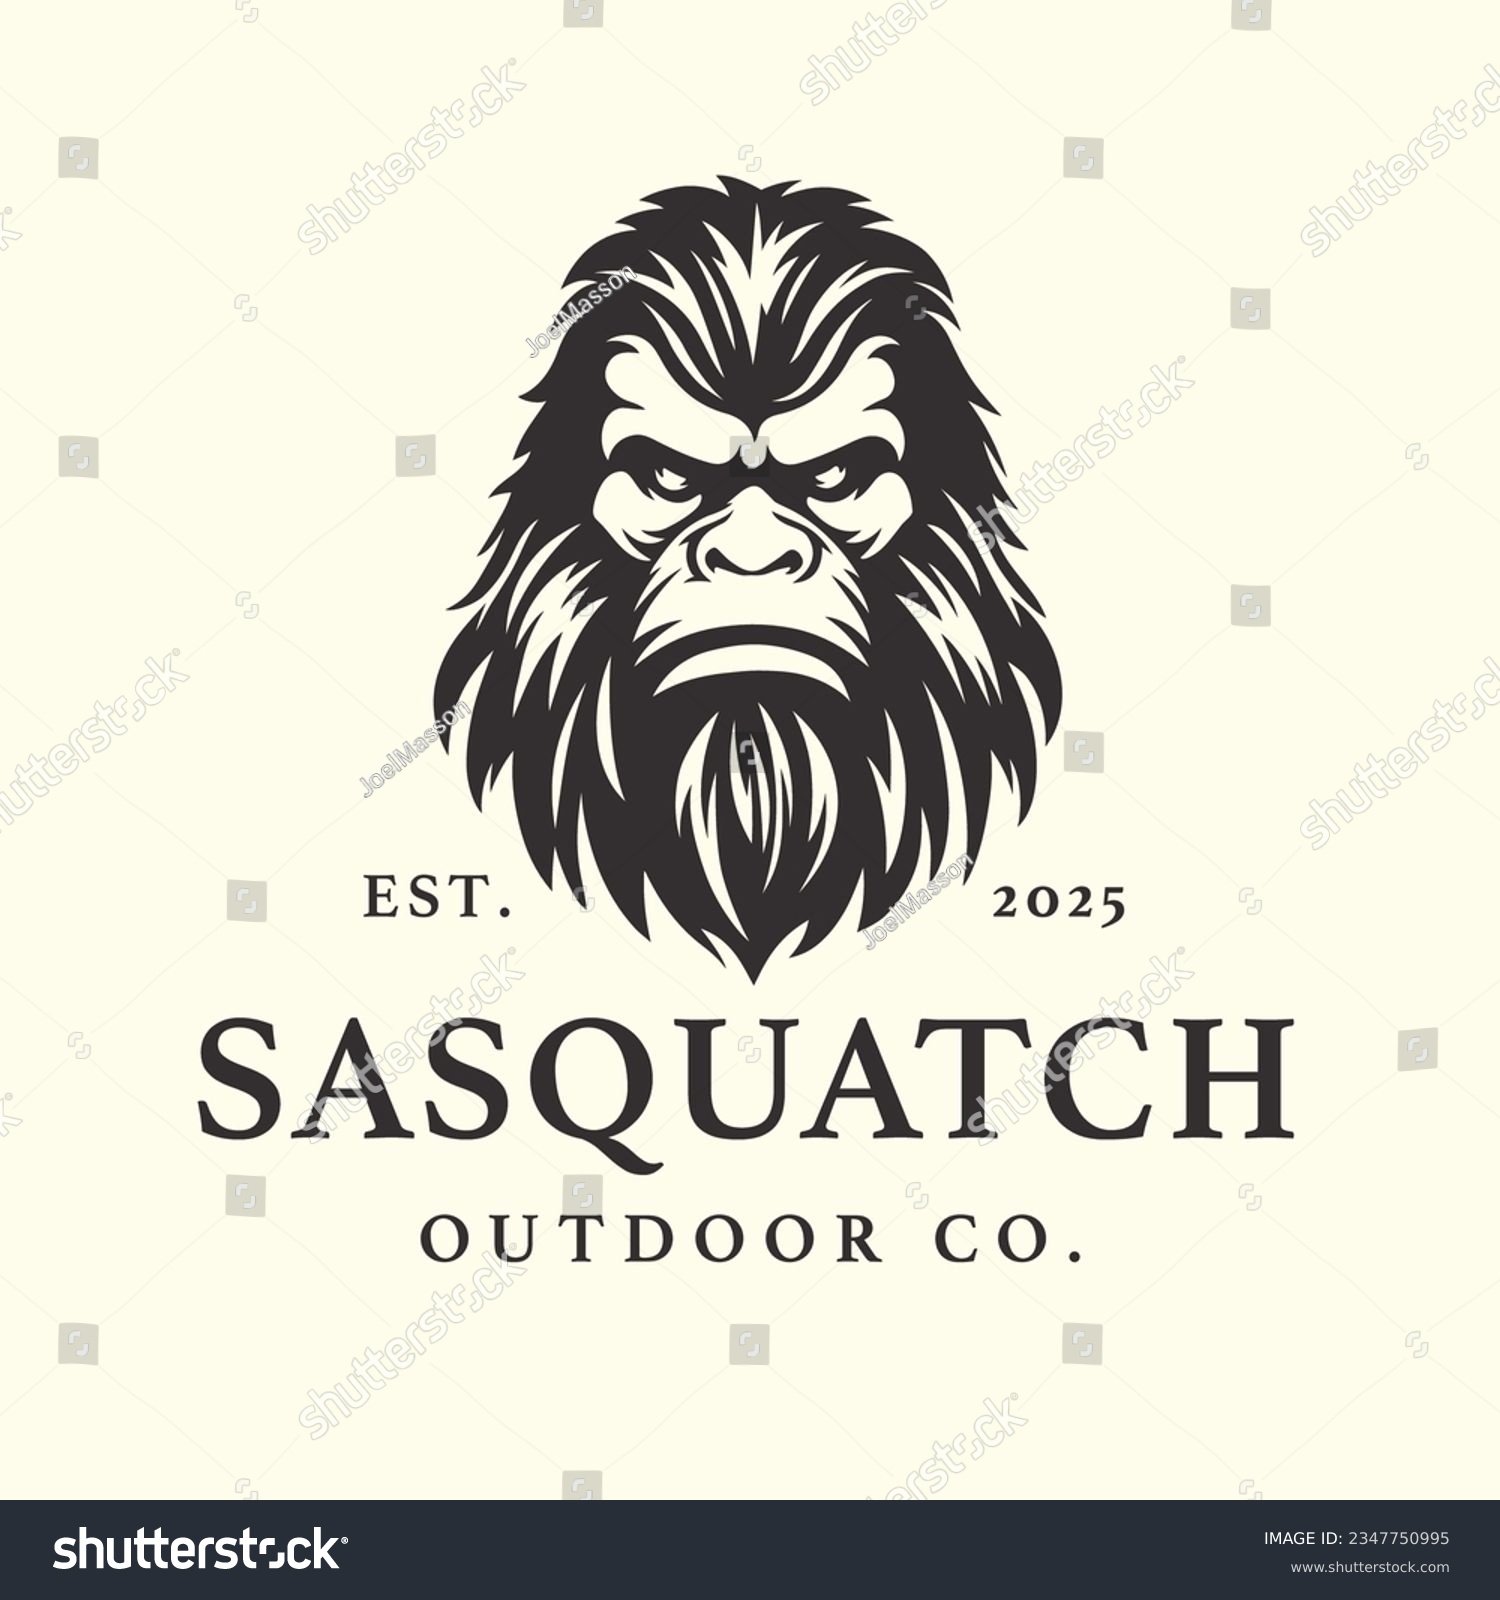 SVG of Squatchy bigfoot logo design. Sasquatch face brand icon. Yeti symbol. Wood ape emblem. Mythical cryptid creature vector illustration. svg